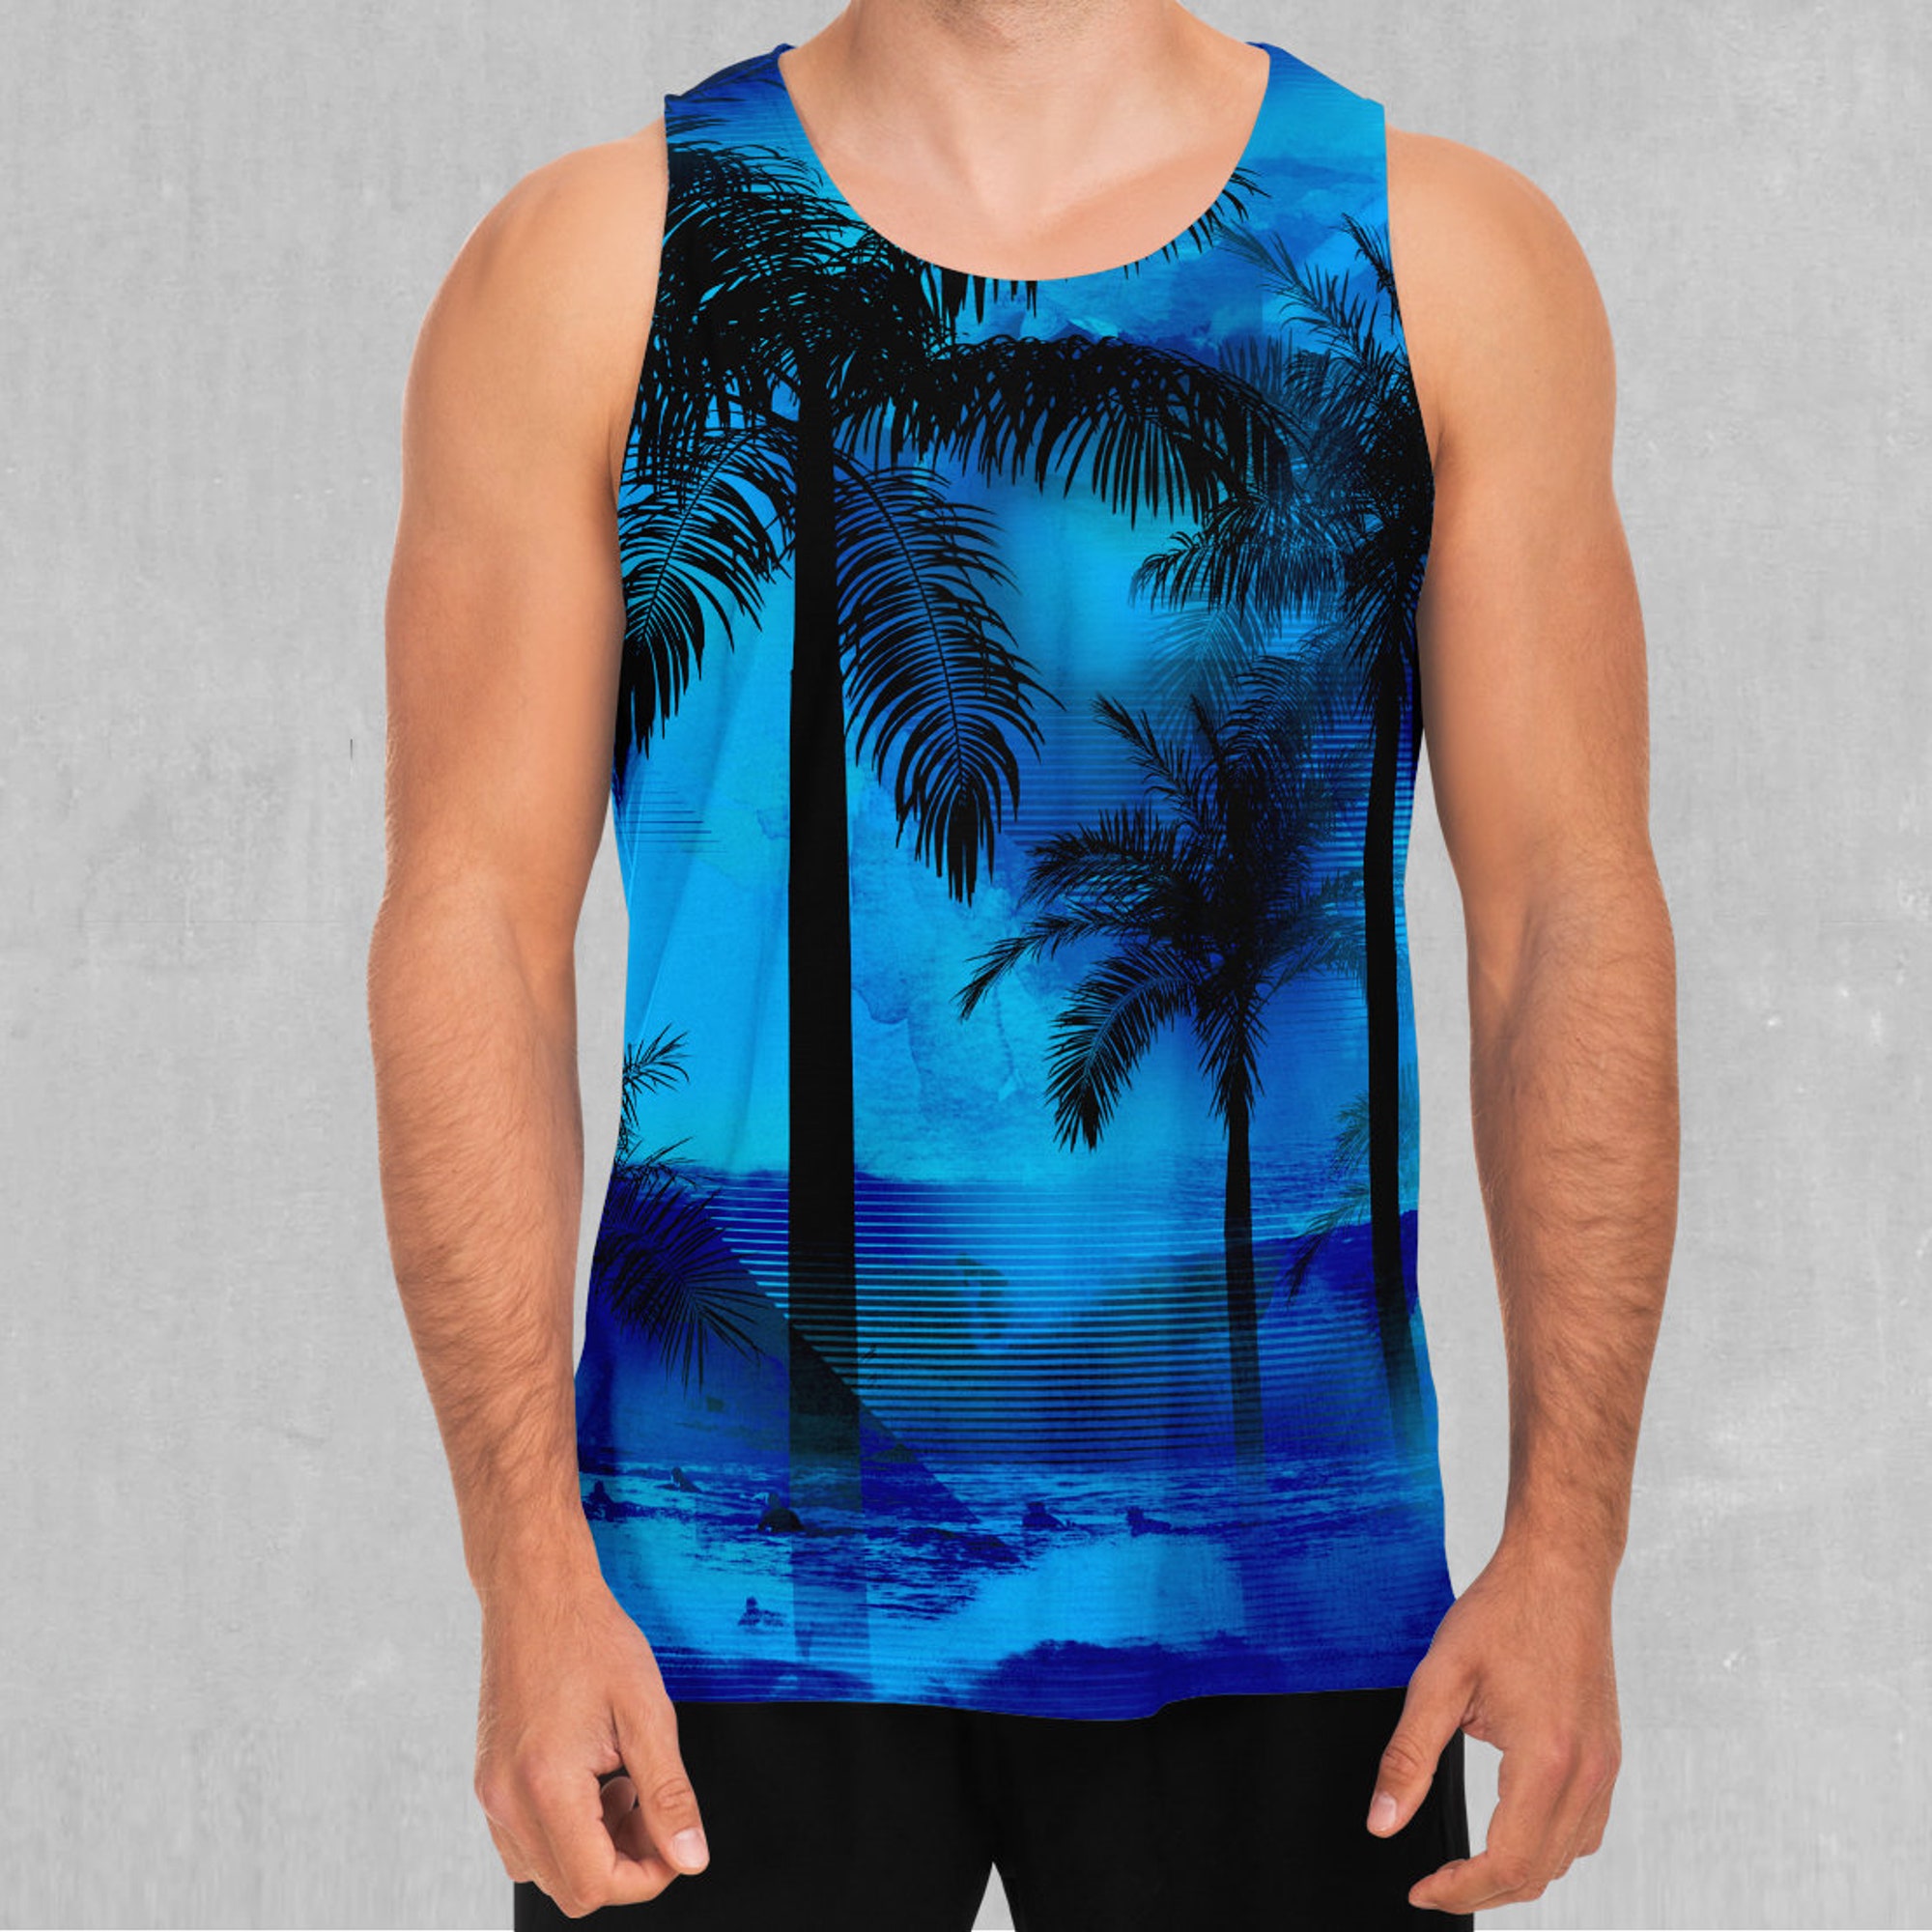 Oceania Coast Tropical Palm Trees 4 Men's Tank Top Muscle Sleeveless Shirt